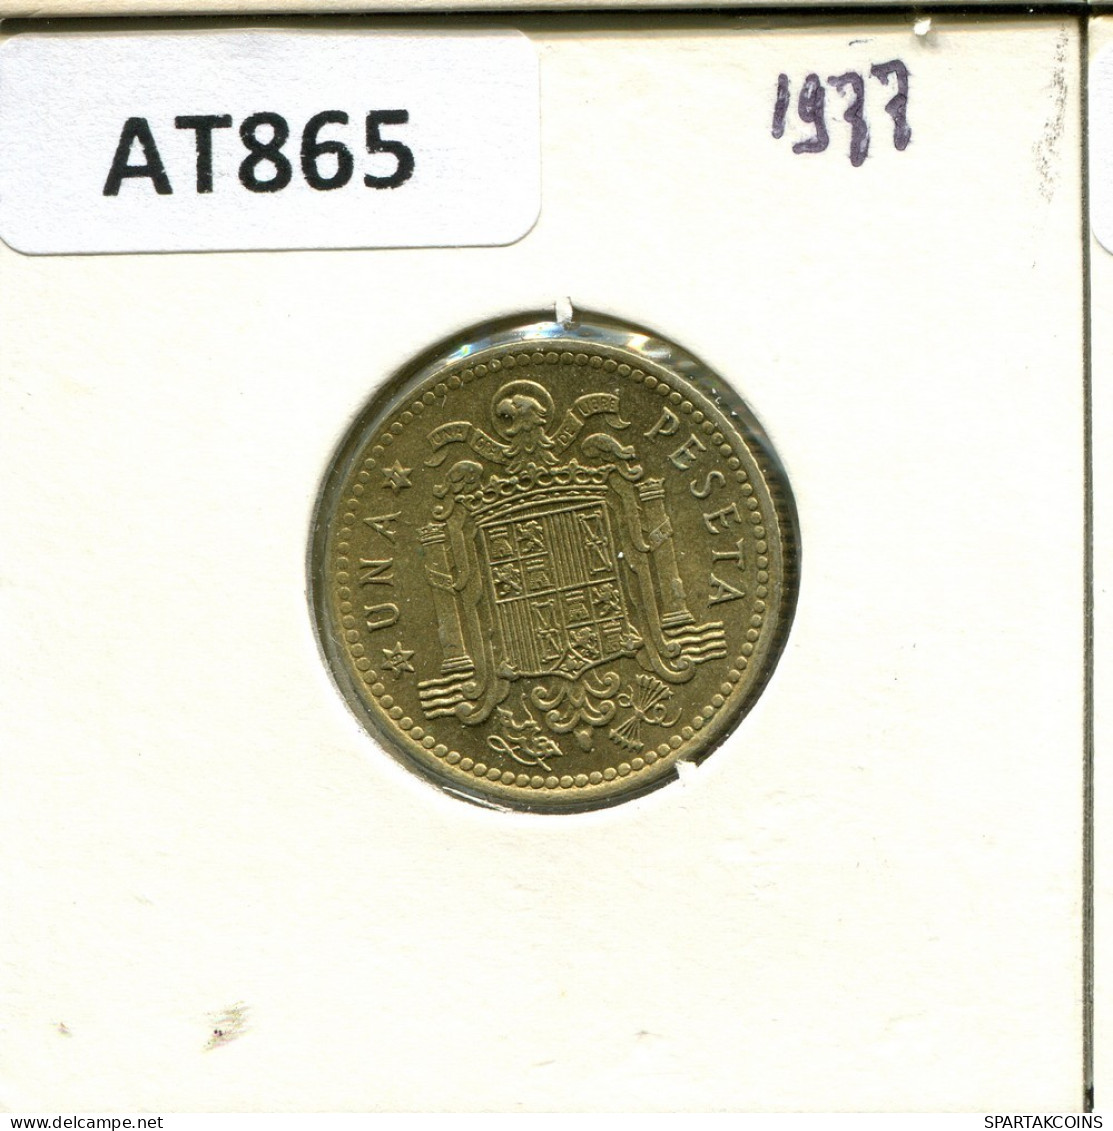 1 PESETA 1975 SPAIN Coin #AT865.U.A - 1 Peseta